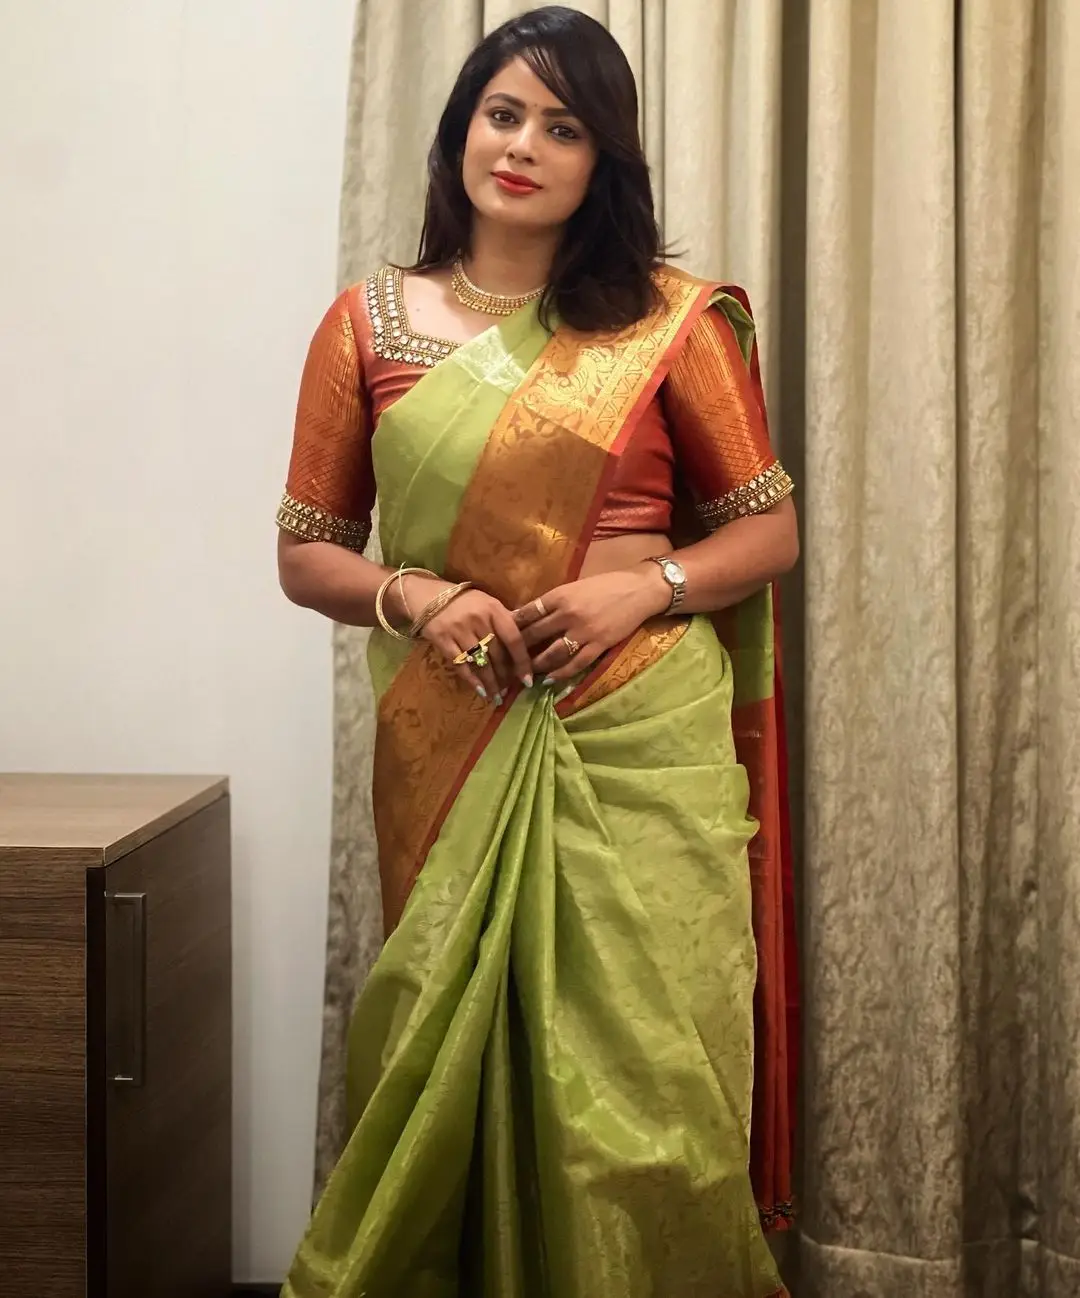 Nandita Swetha in Indian Traditional Green Saree Blouse